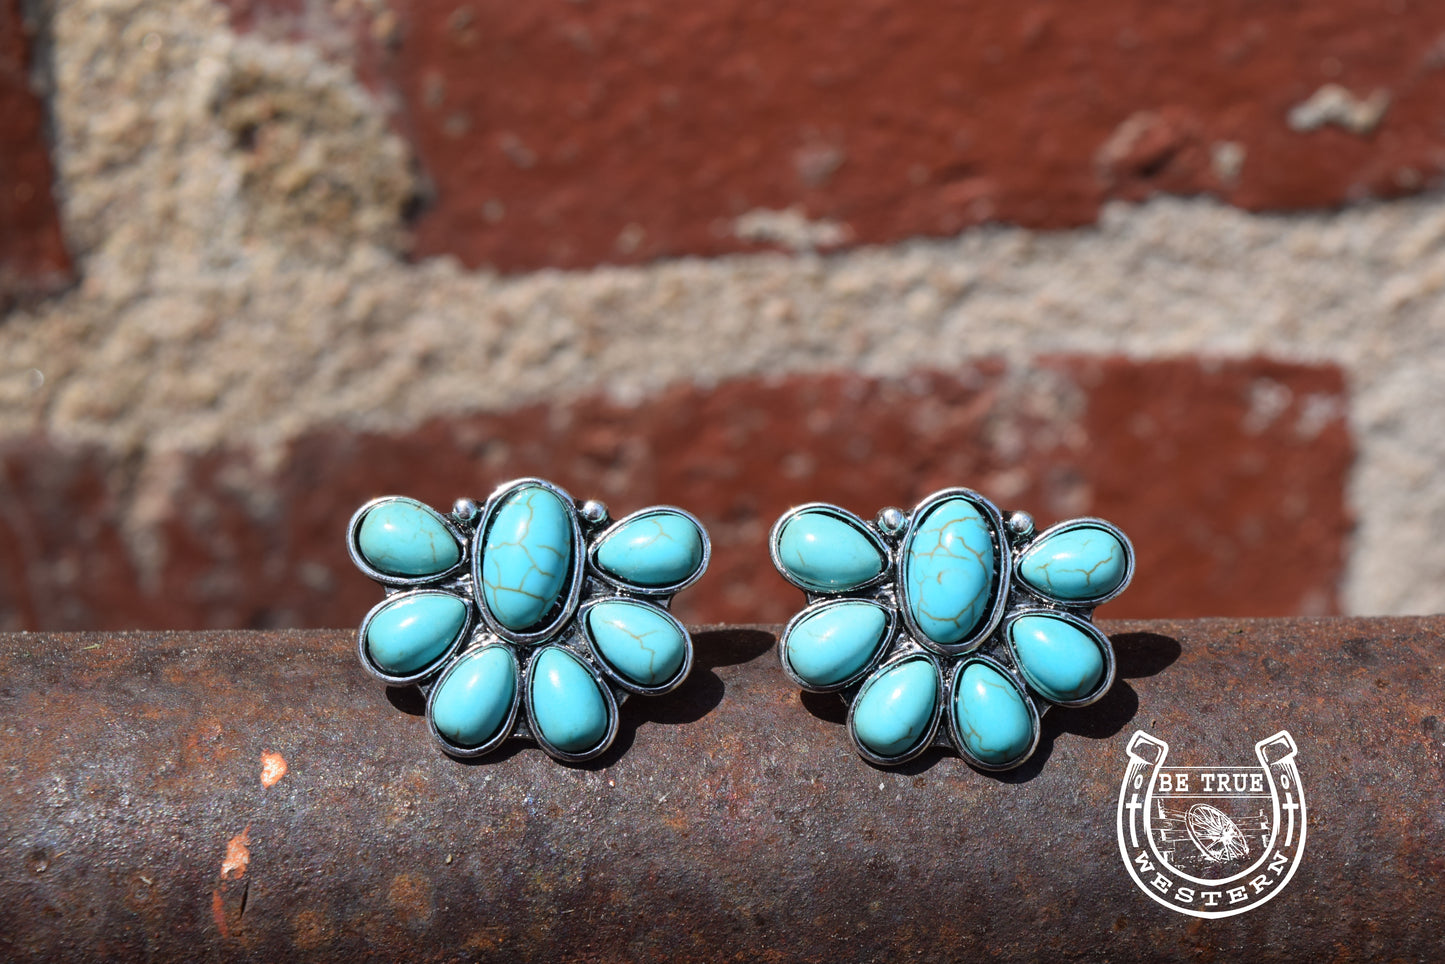 The Turquoise Stonehenge Earrings